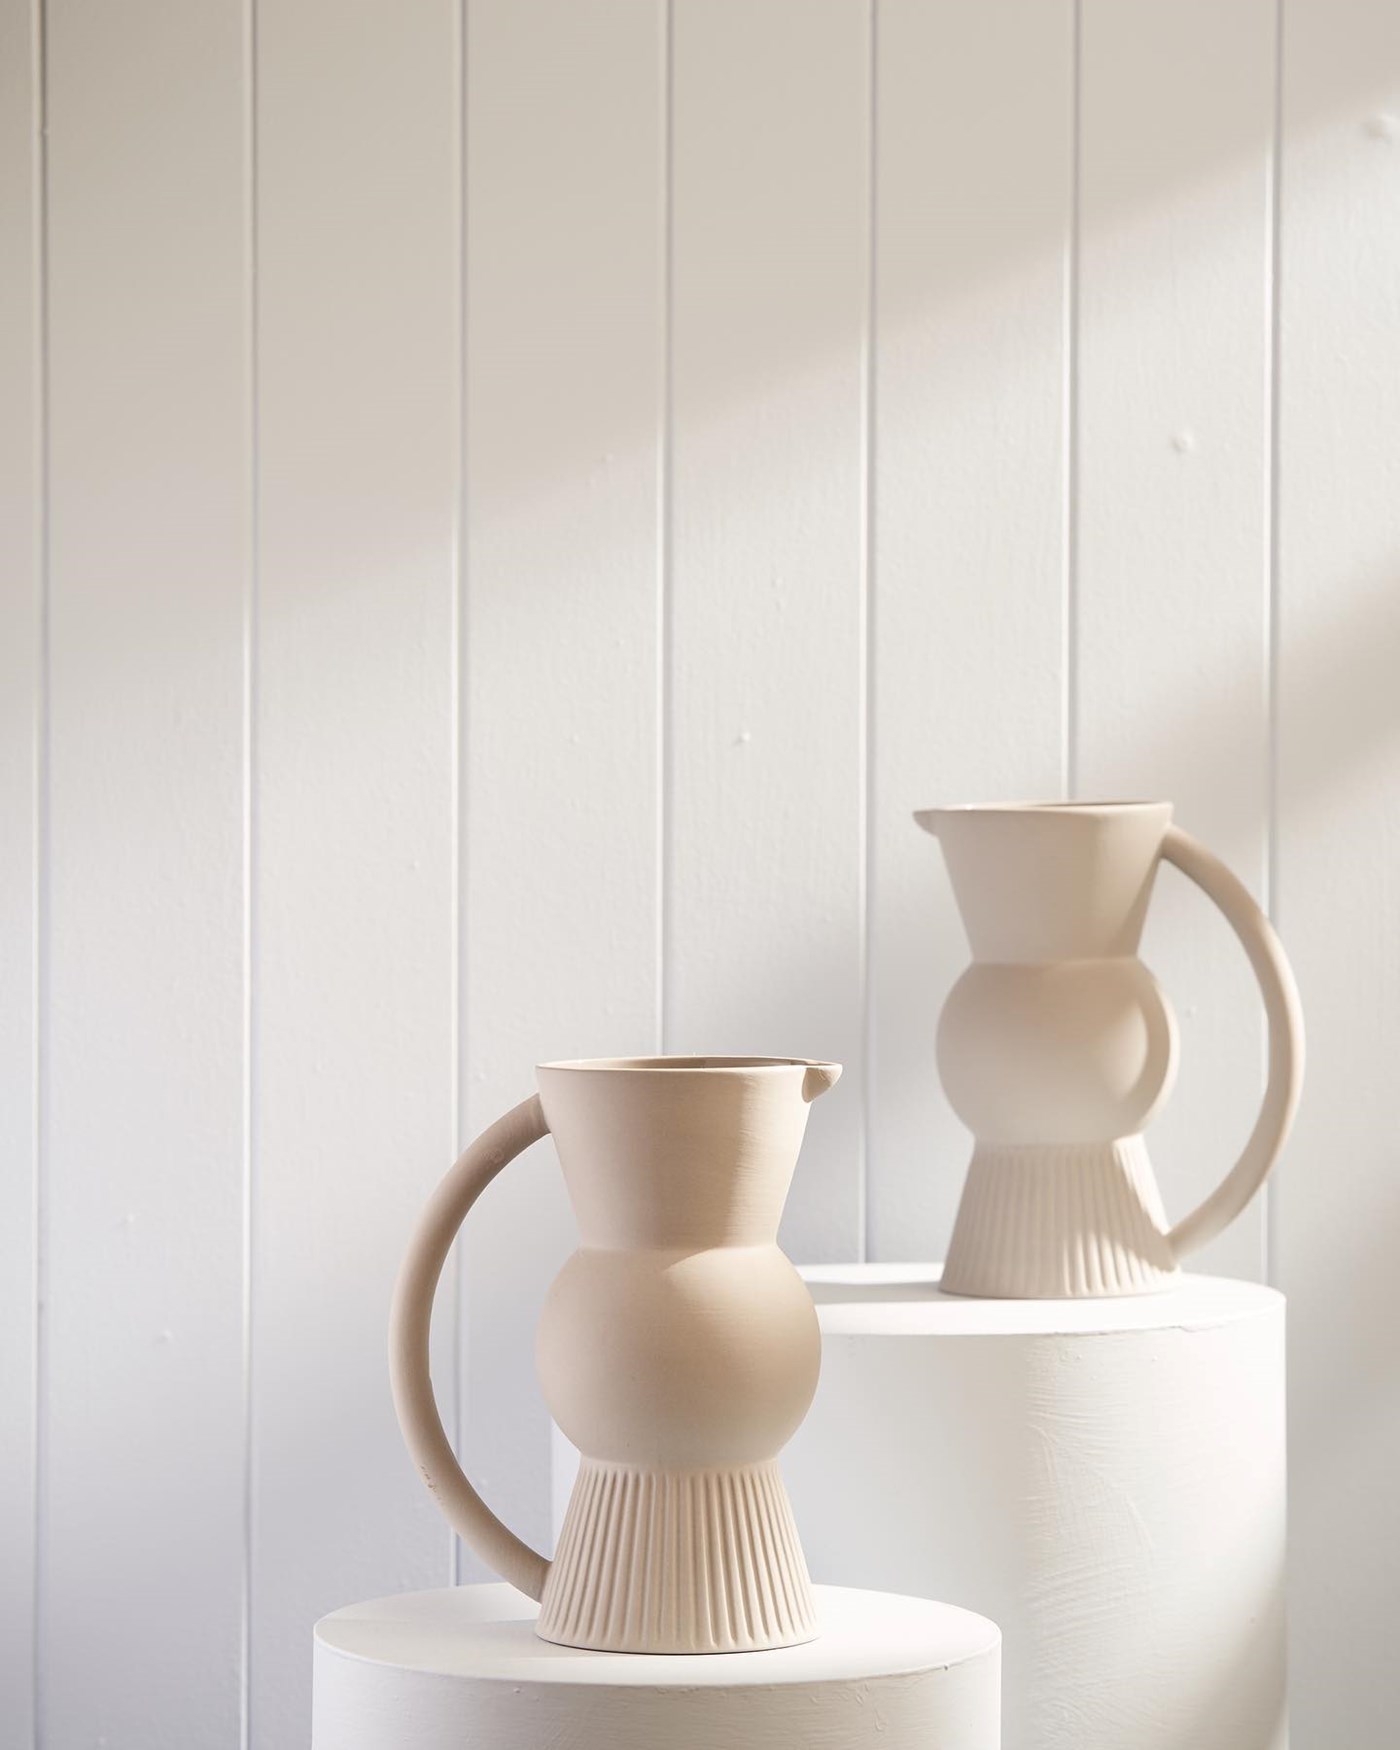 Two sculptural white ceramic jugs from Robert Gordon sitting on circular plinths 